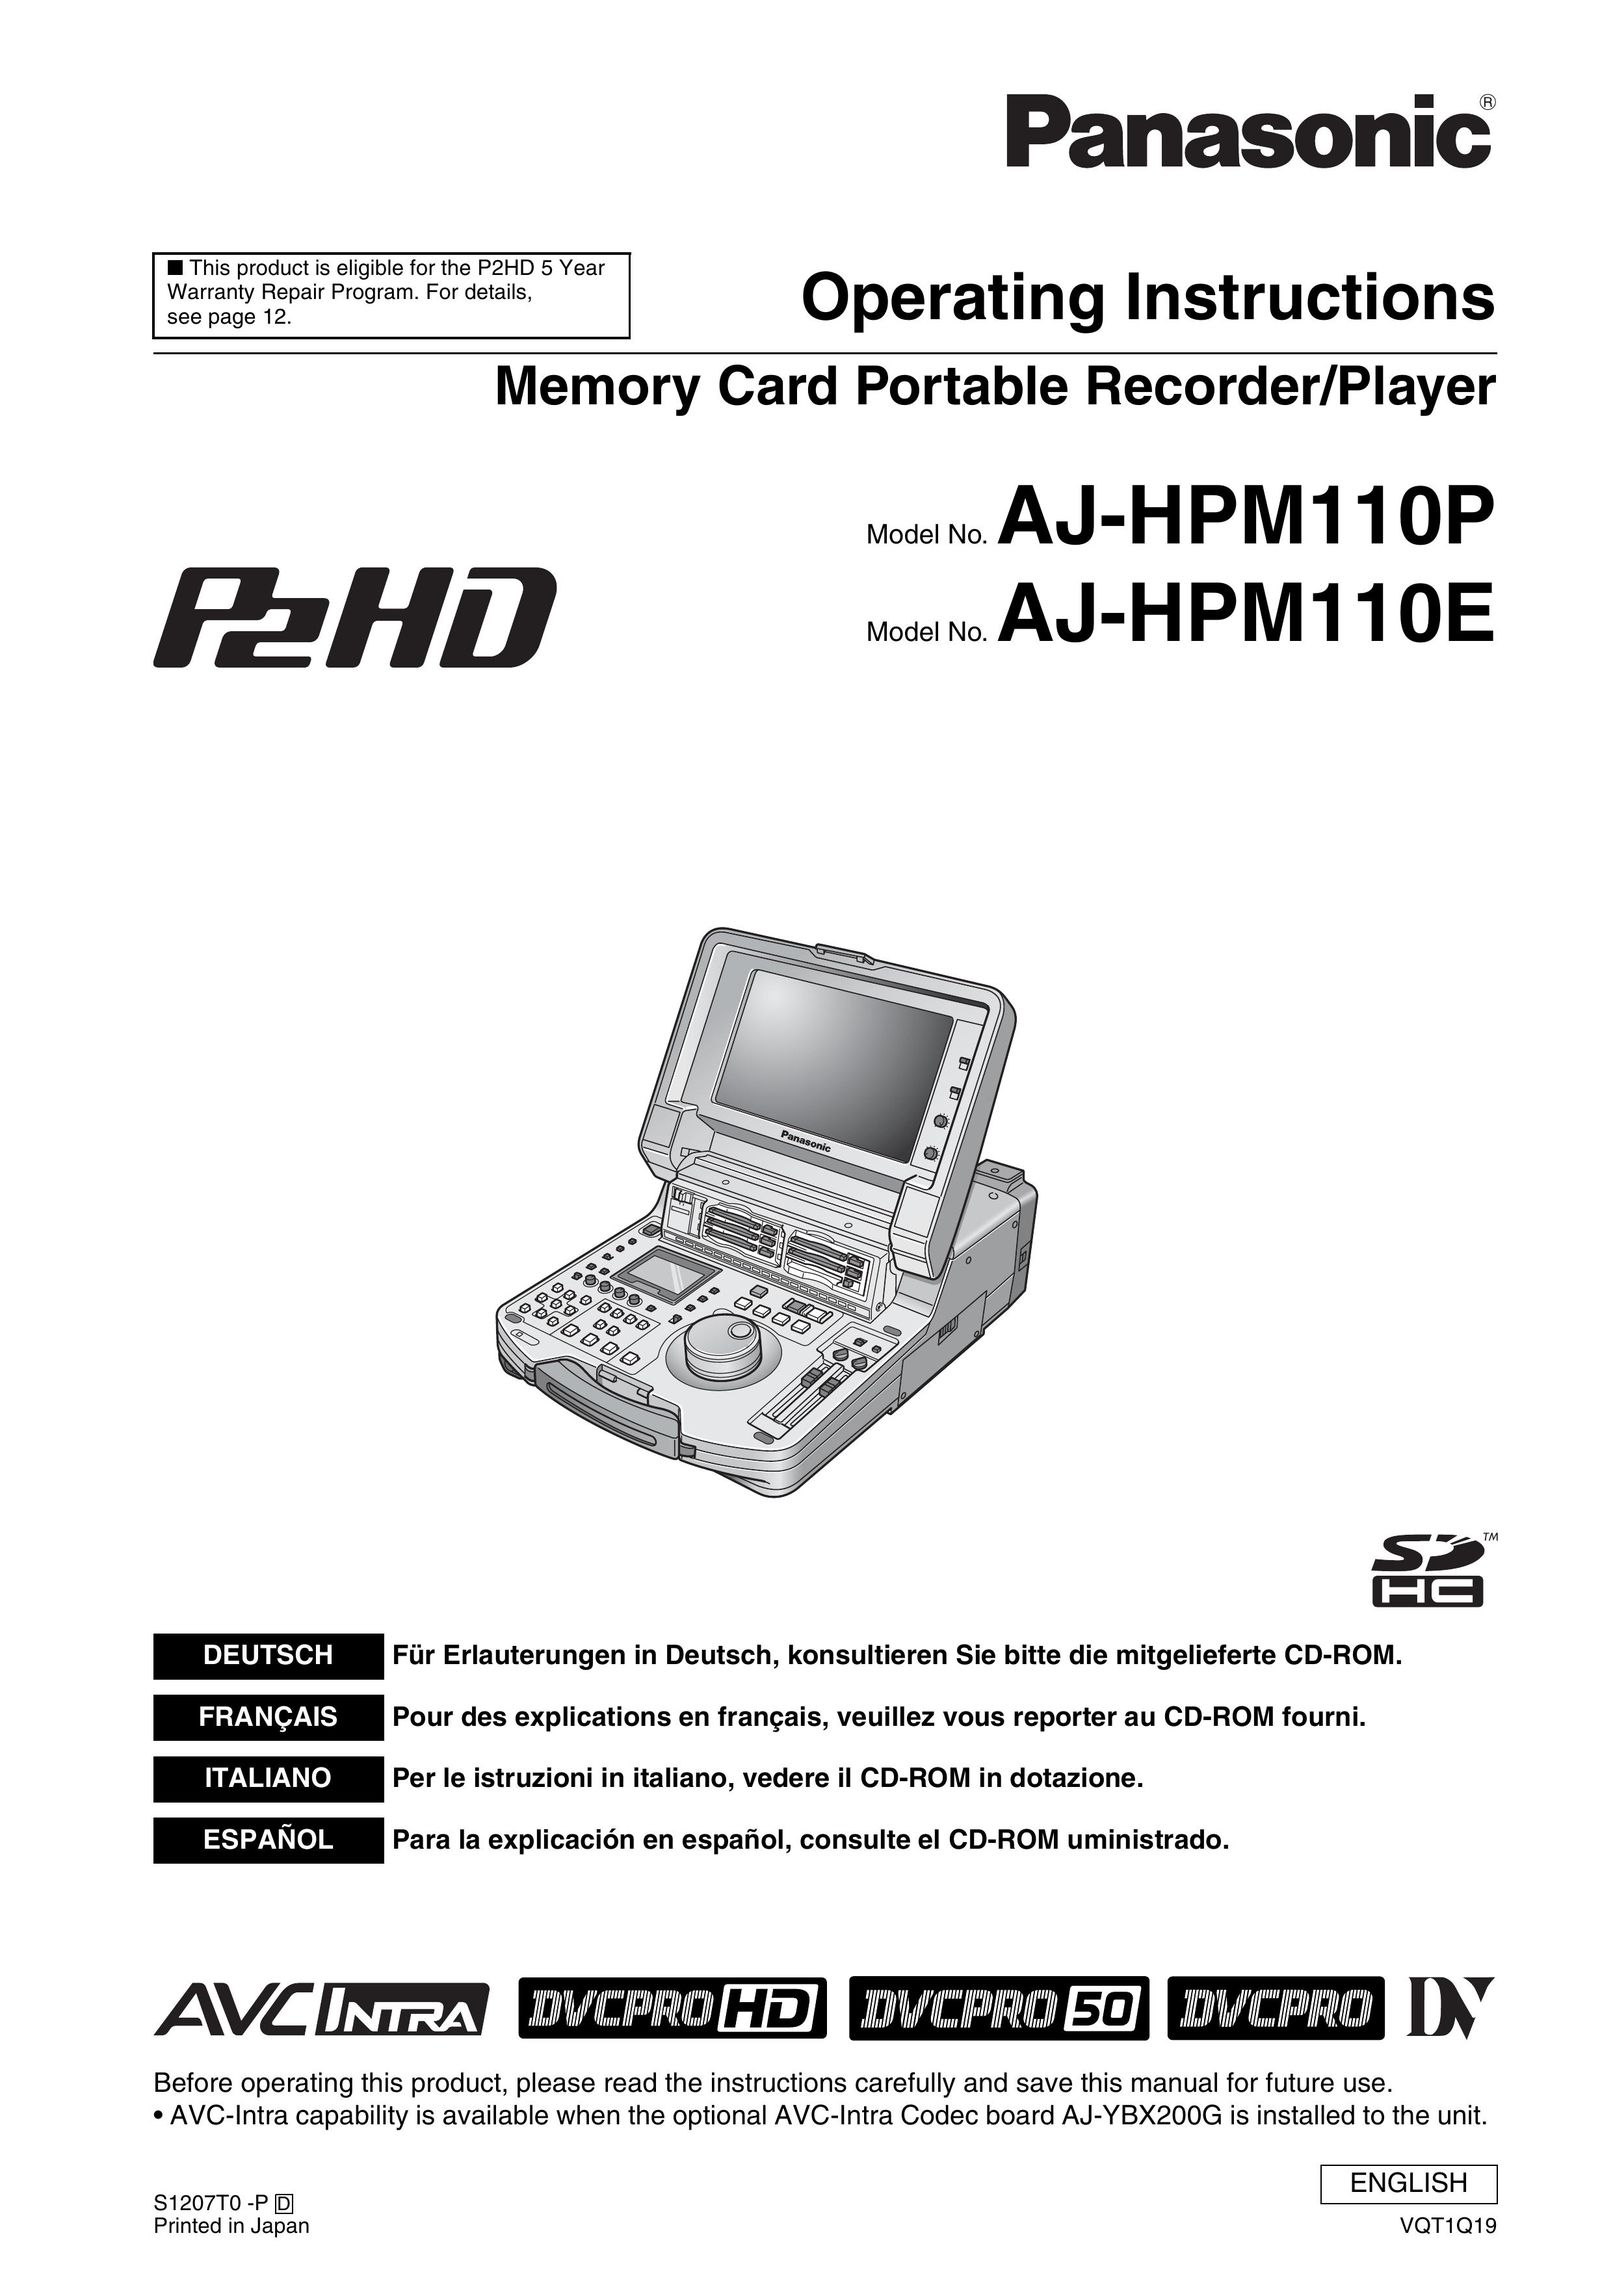 Panasonic AJ-HPM110P Portable Multimedia Player User Manual